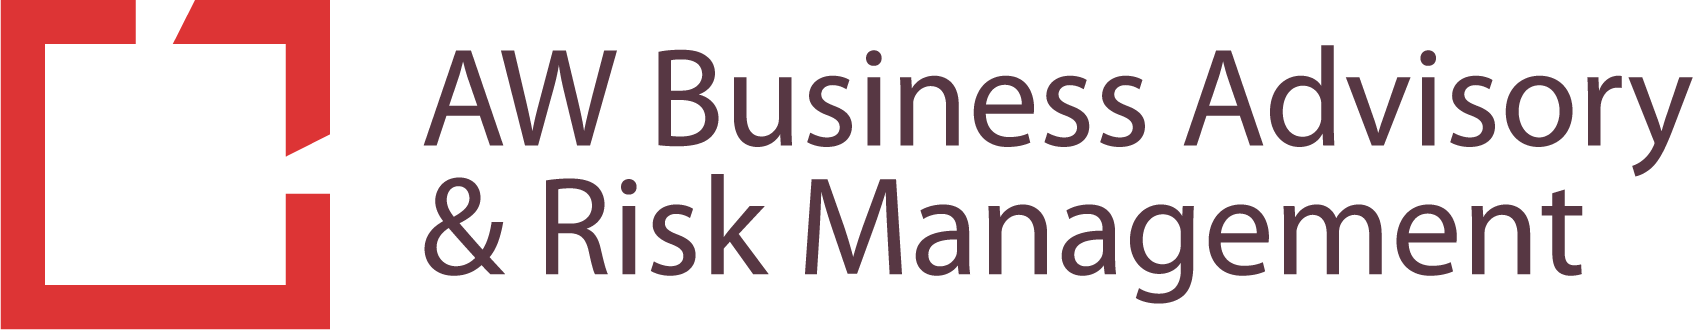 AW Business Advisory & Risk Management